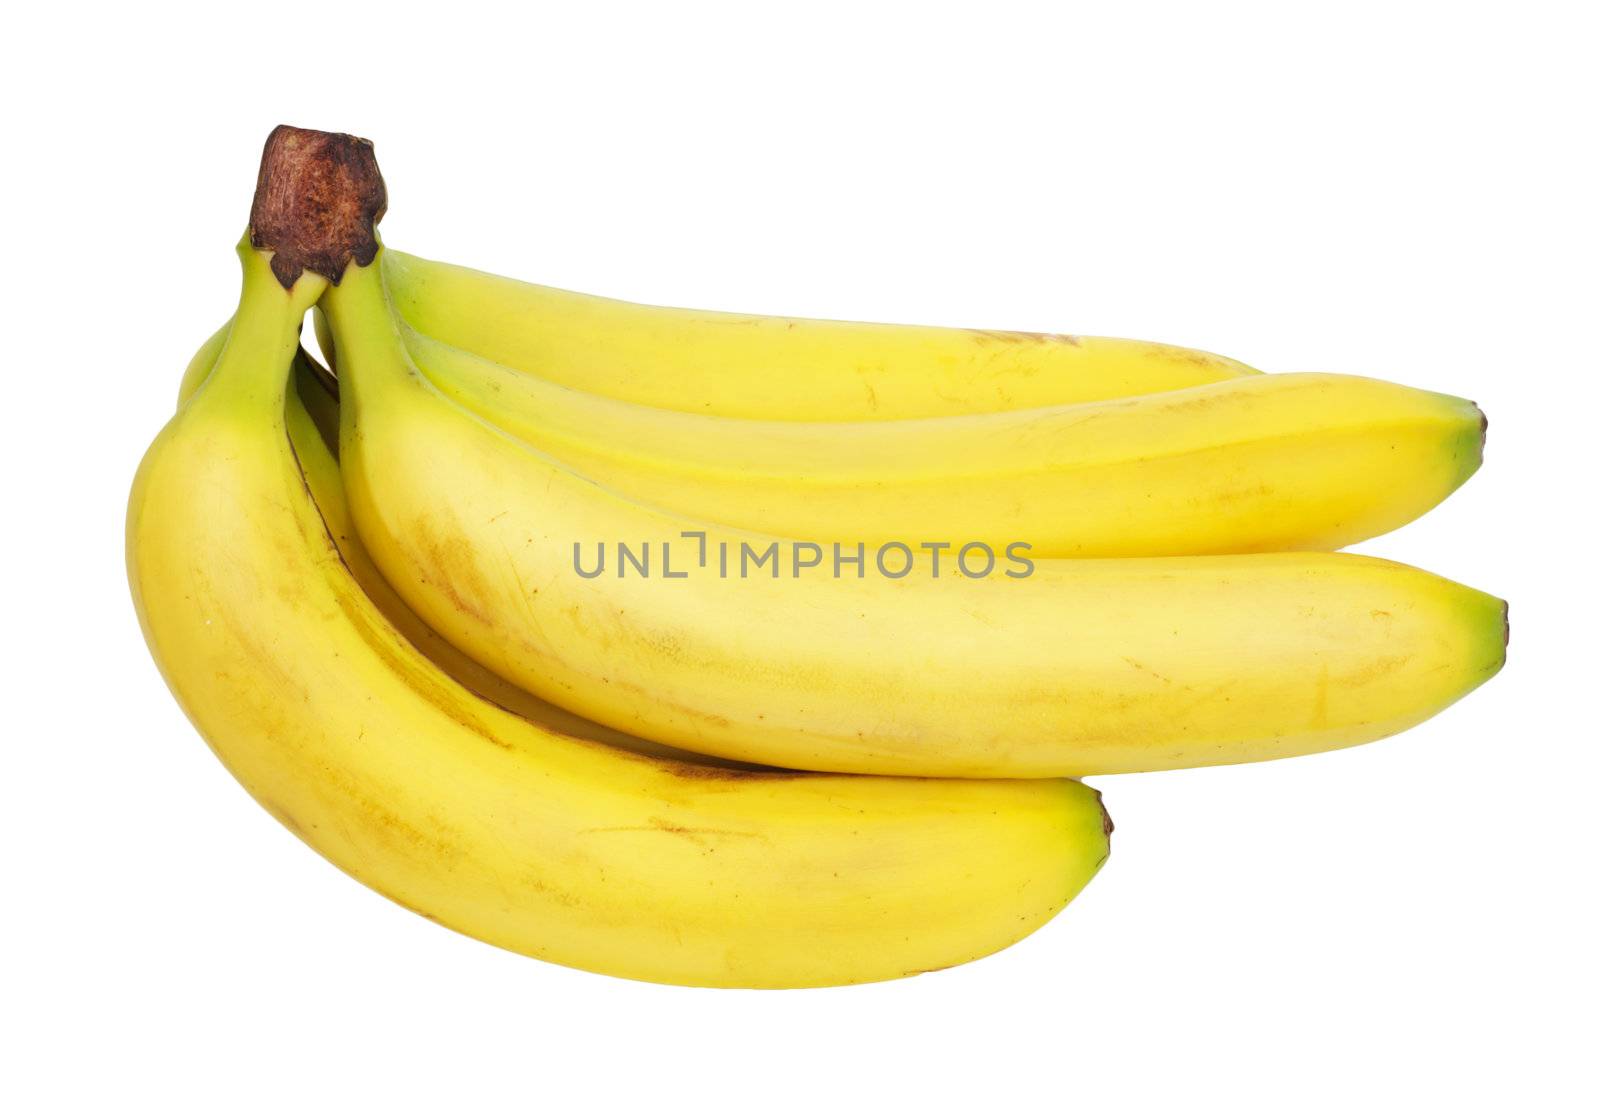 a bunch of bananas by schankz